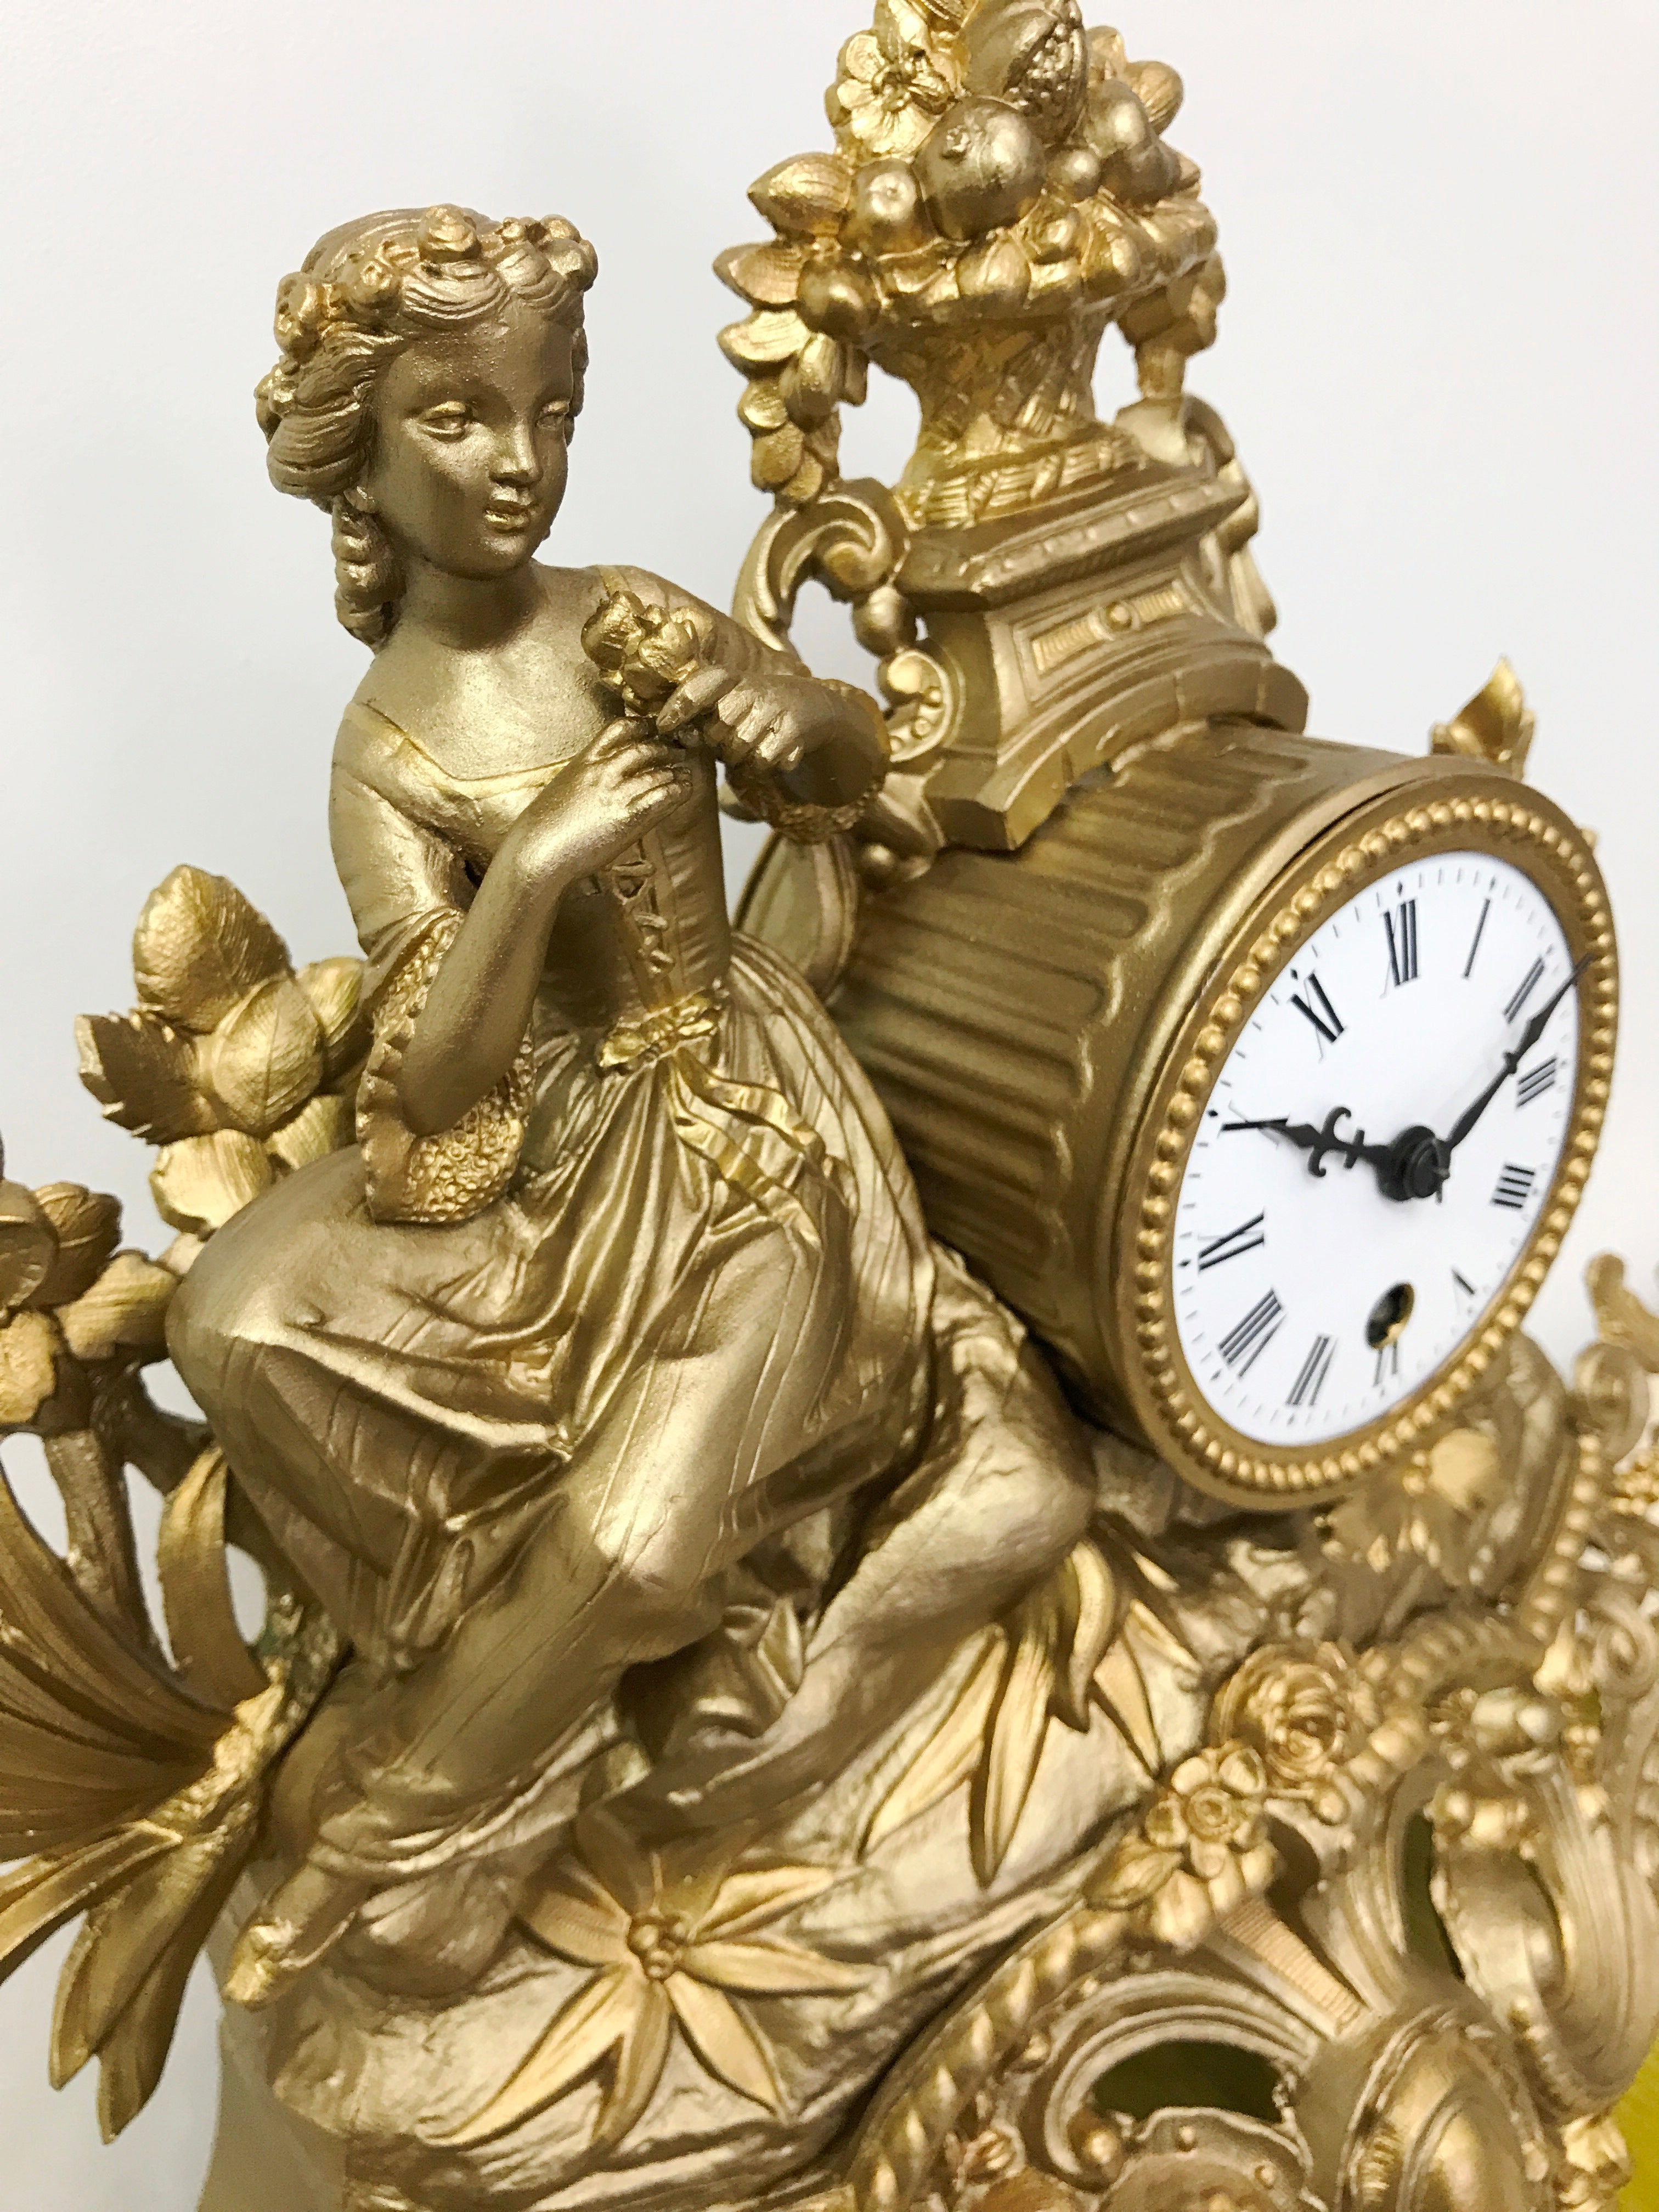 Antique Figural Spelter Mantel Clock | eXibit collection